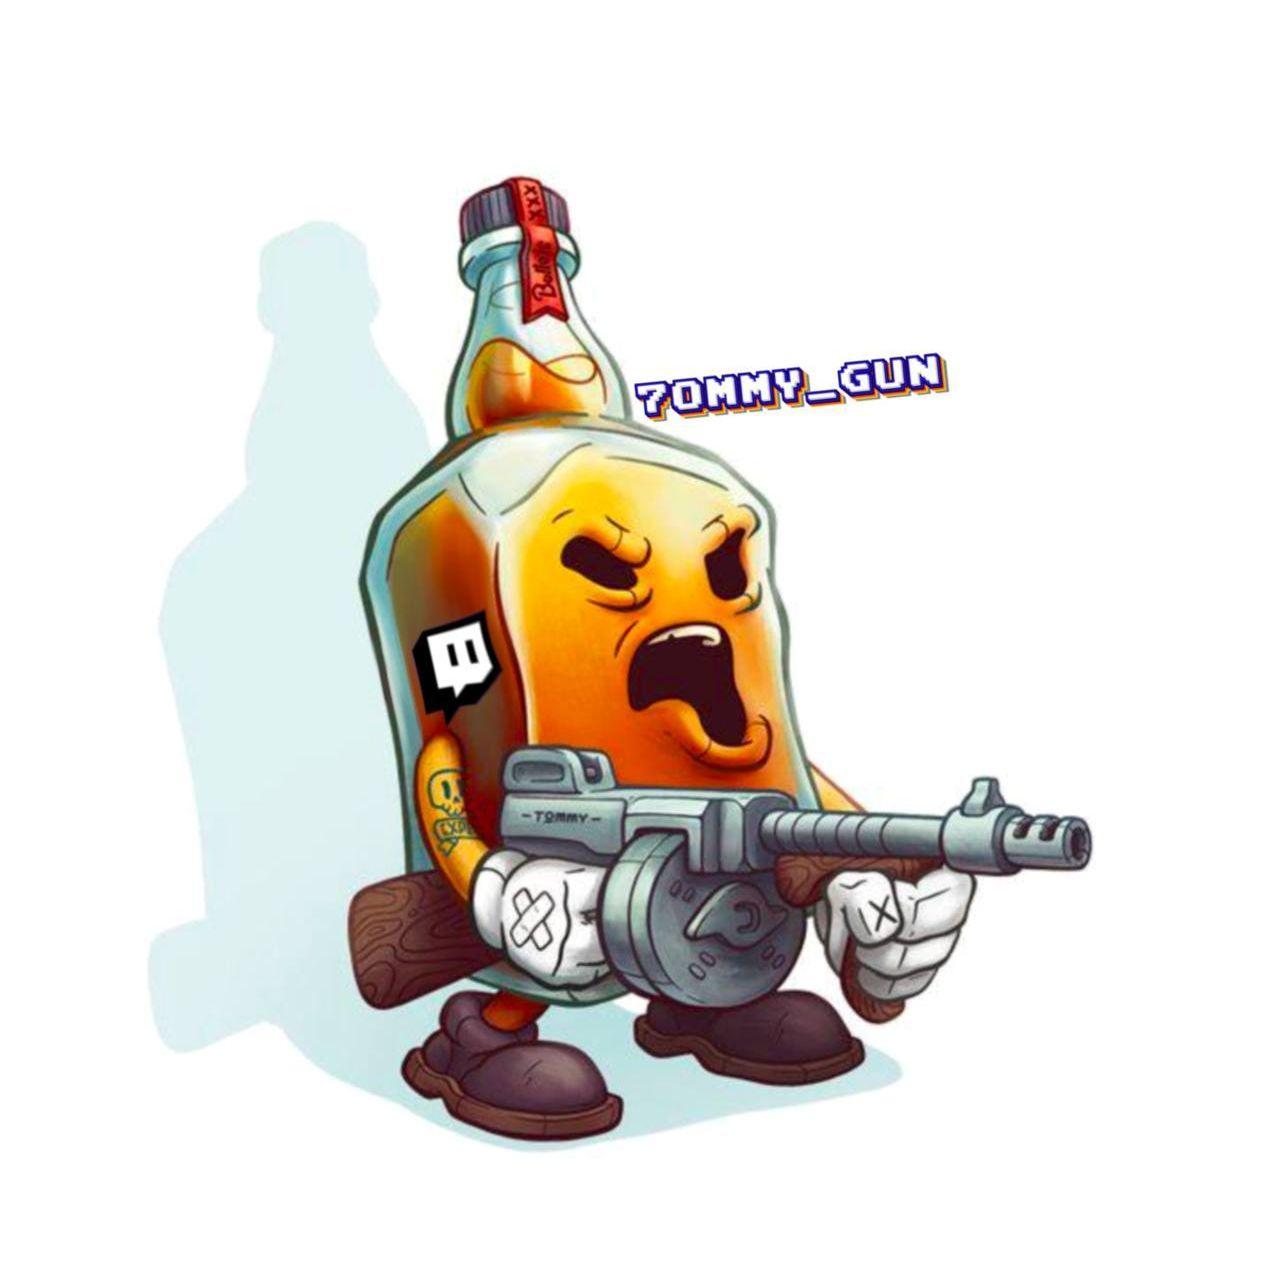 Player 7ommy-Gun avatar